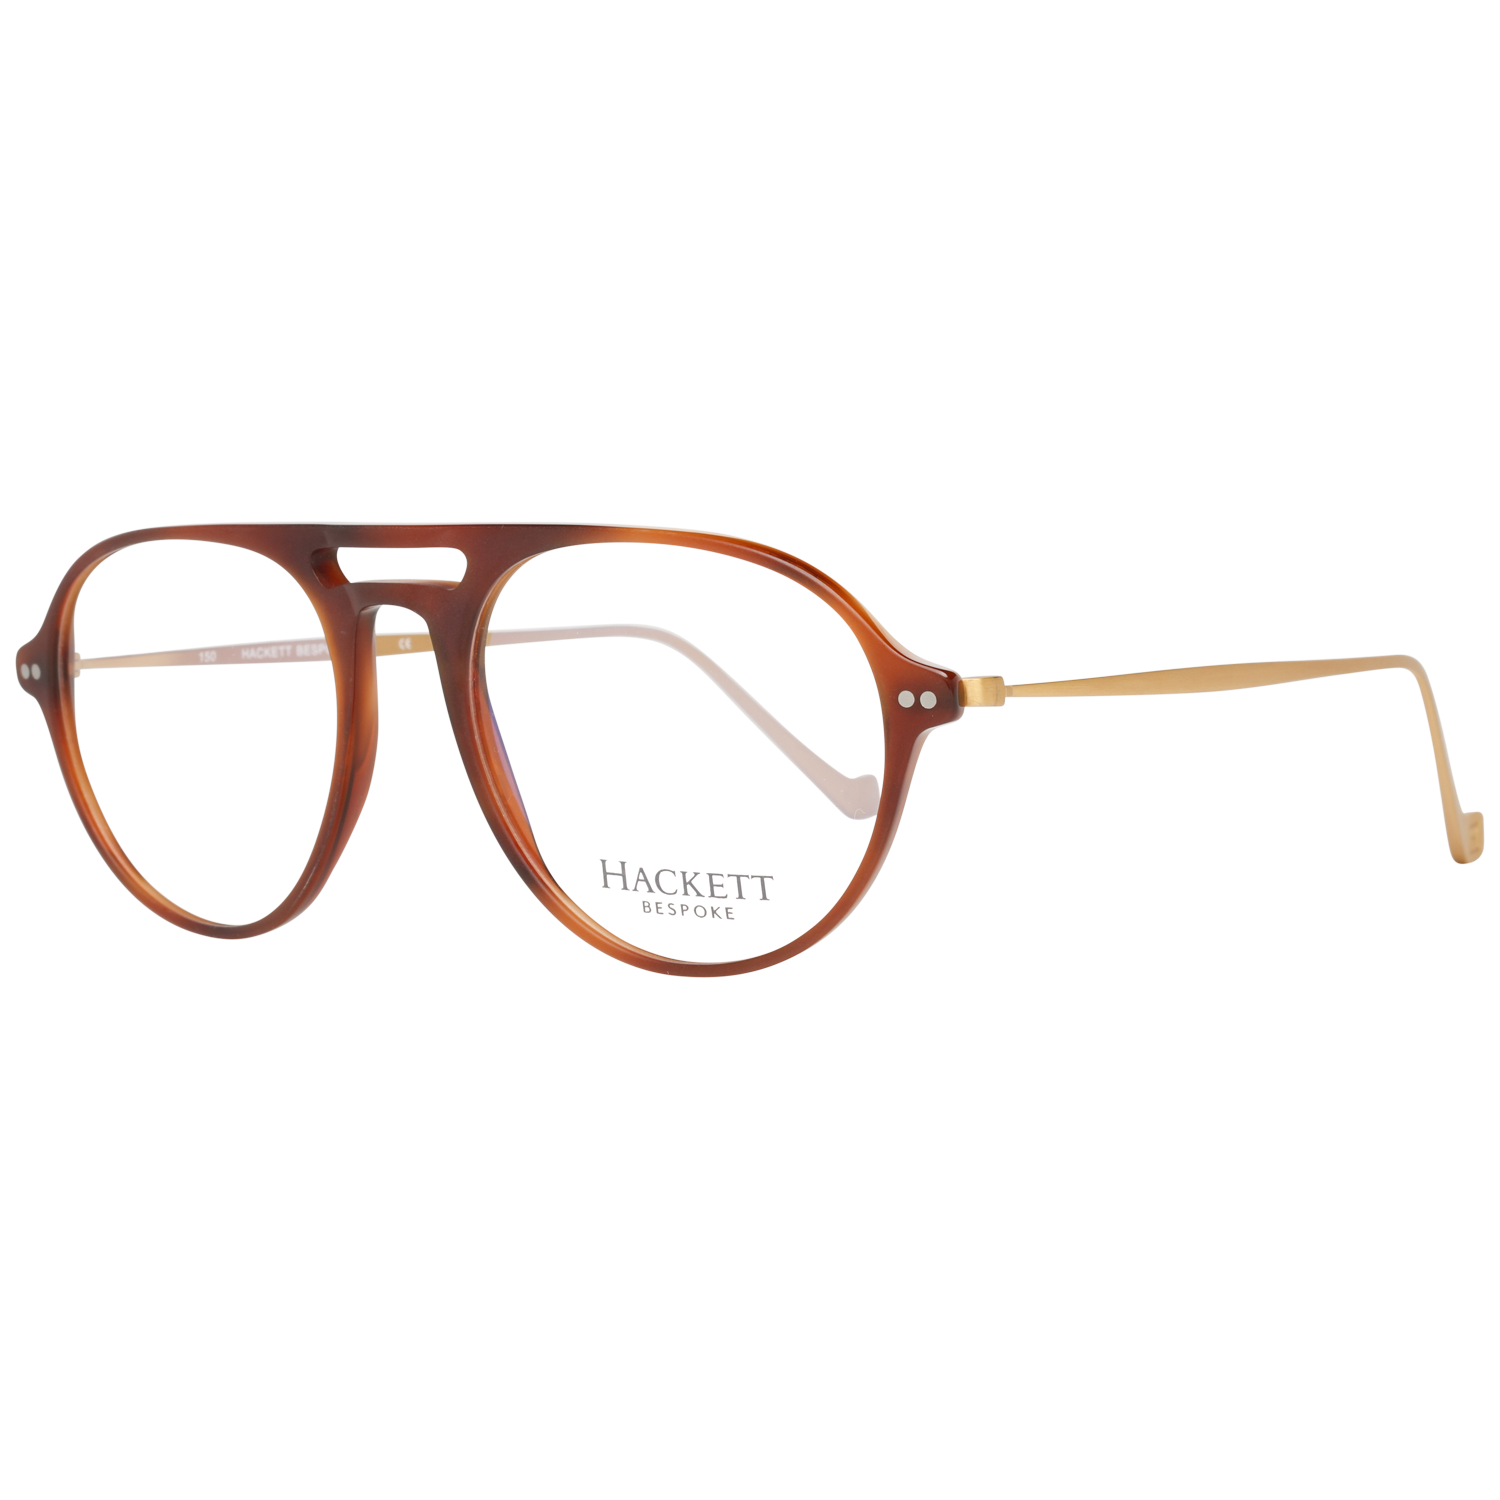 Hackett Frames Hackett Bespoke Glasses Optical Frame HEB239 152 51 Eyeglasses Eyewear UK USA Australia 